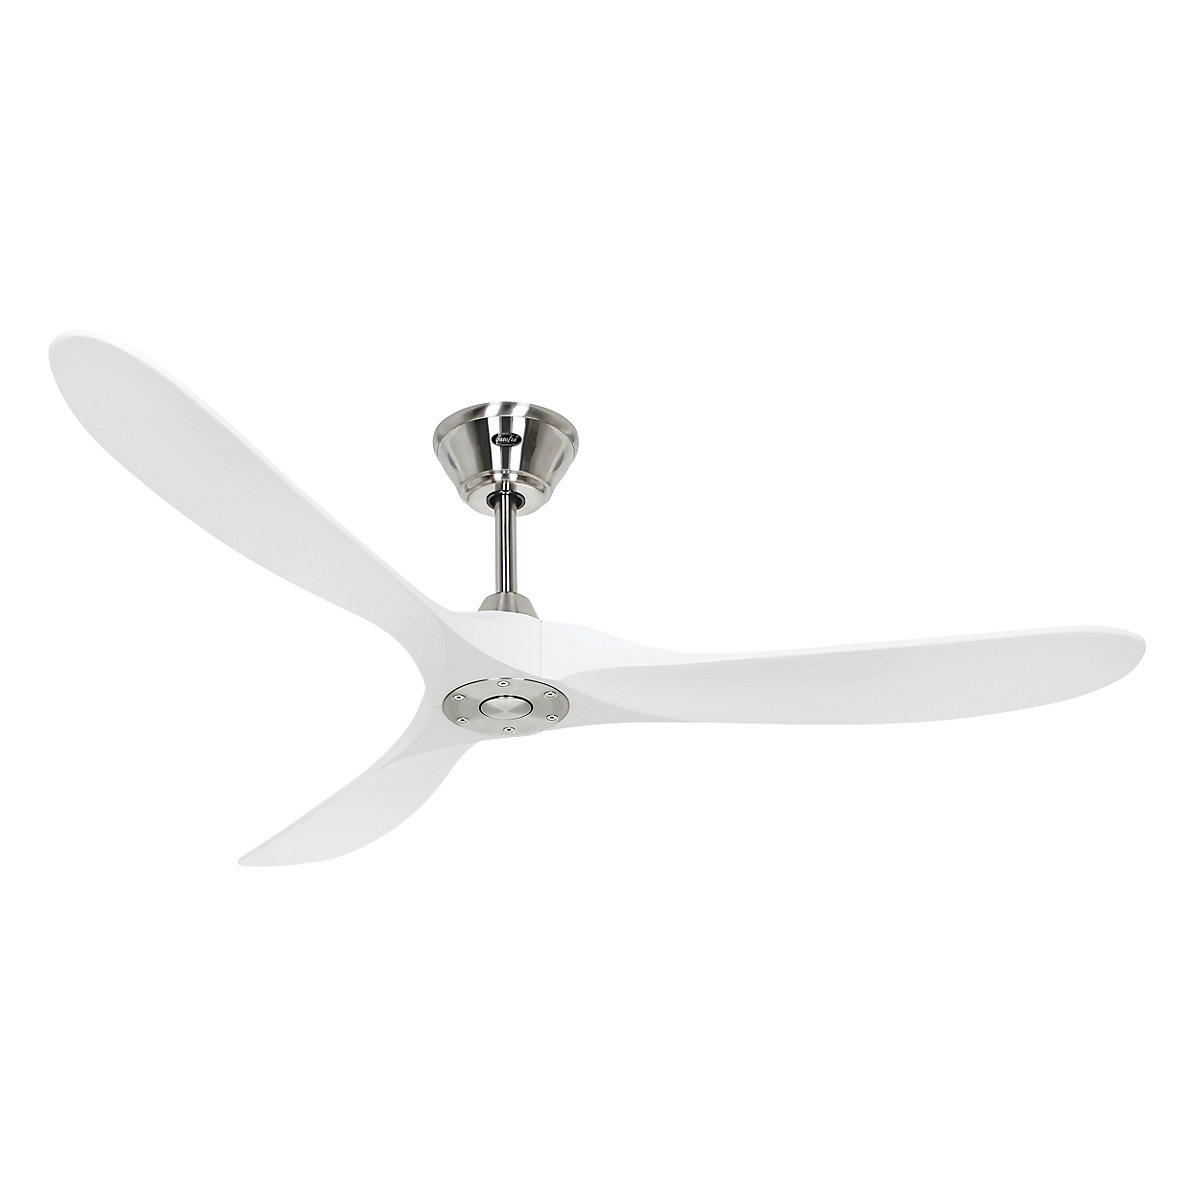 Plafondventilator ECO GENUINO, propellerblad-Ø 1520 mm, matwit / chroom